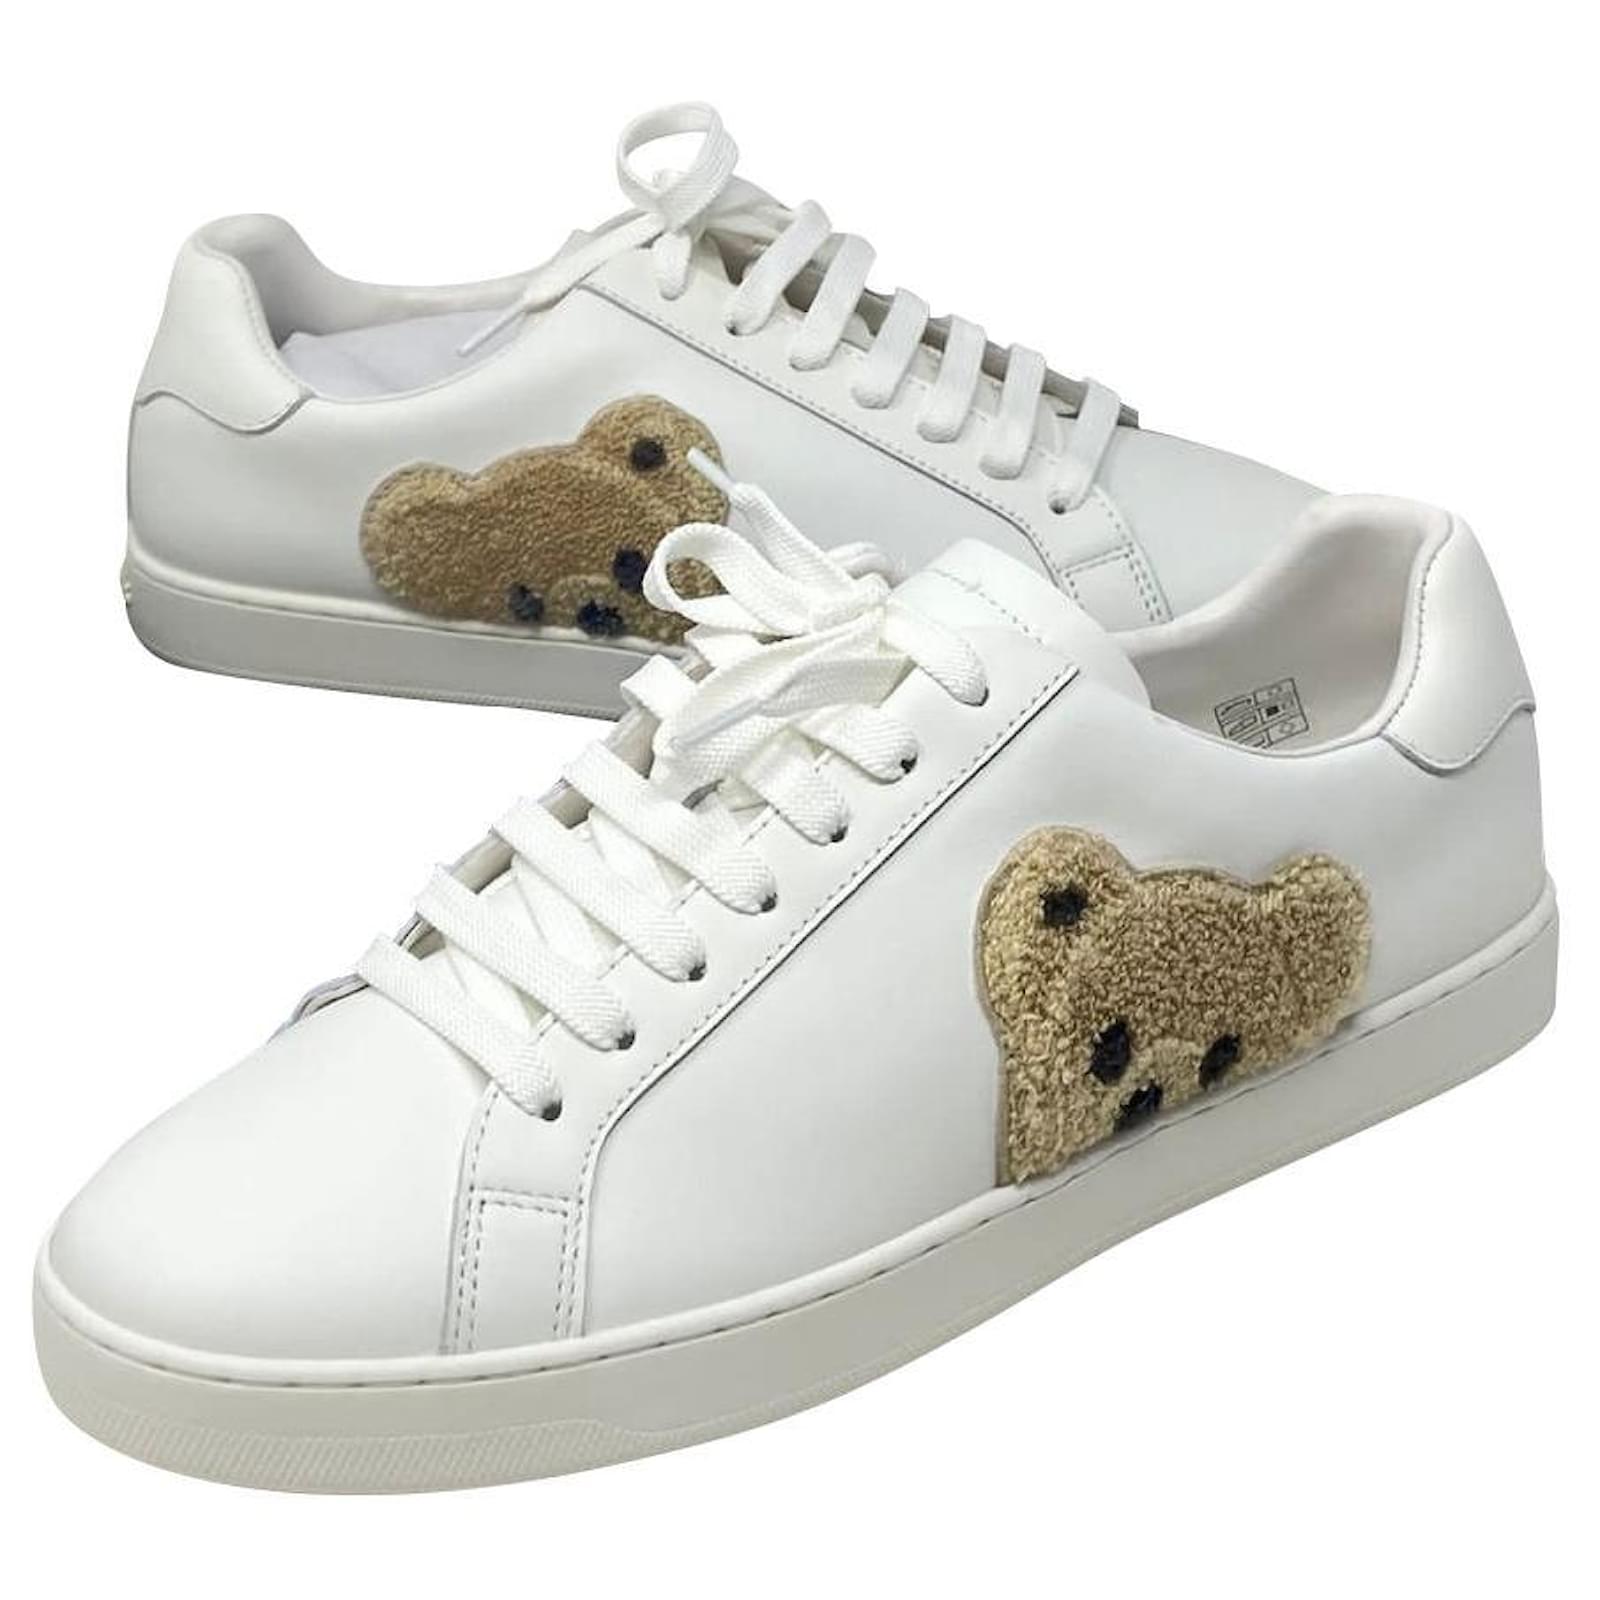 https://cdn1.jolicloset.com/imgr/full/2022/06/540075-1/branco-couro-sapatos-pal-angels-bear-tenis-sneakers-teddy-bear.jpg